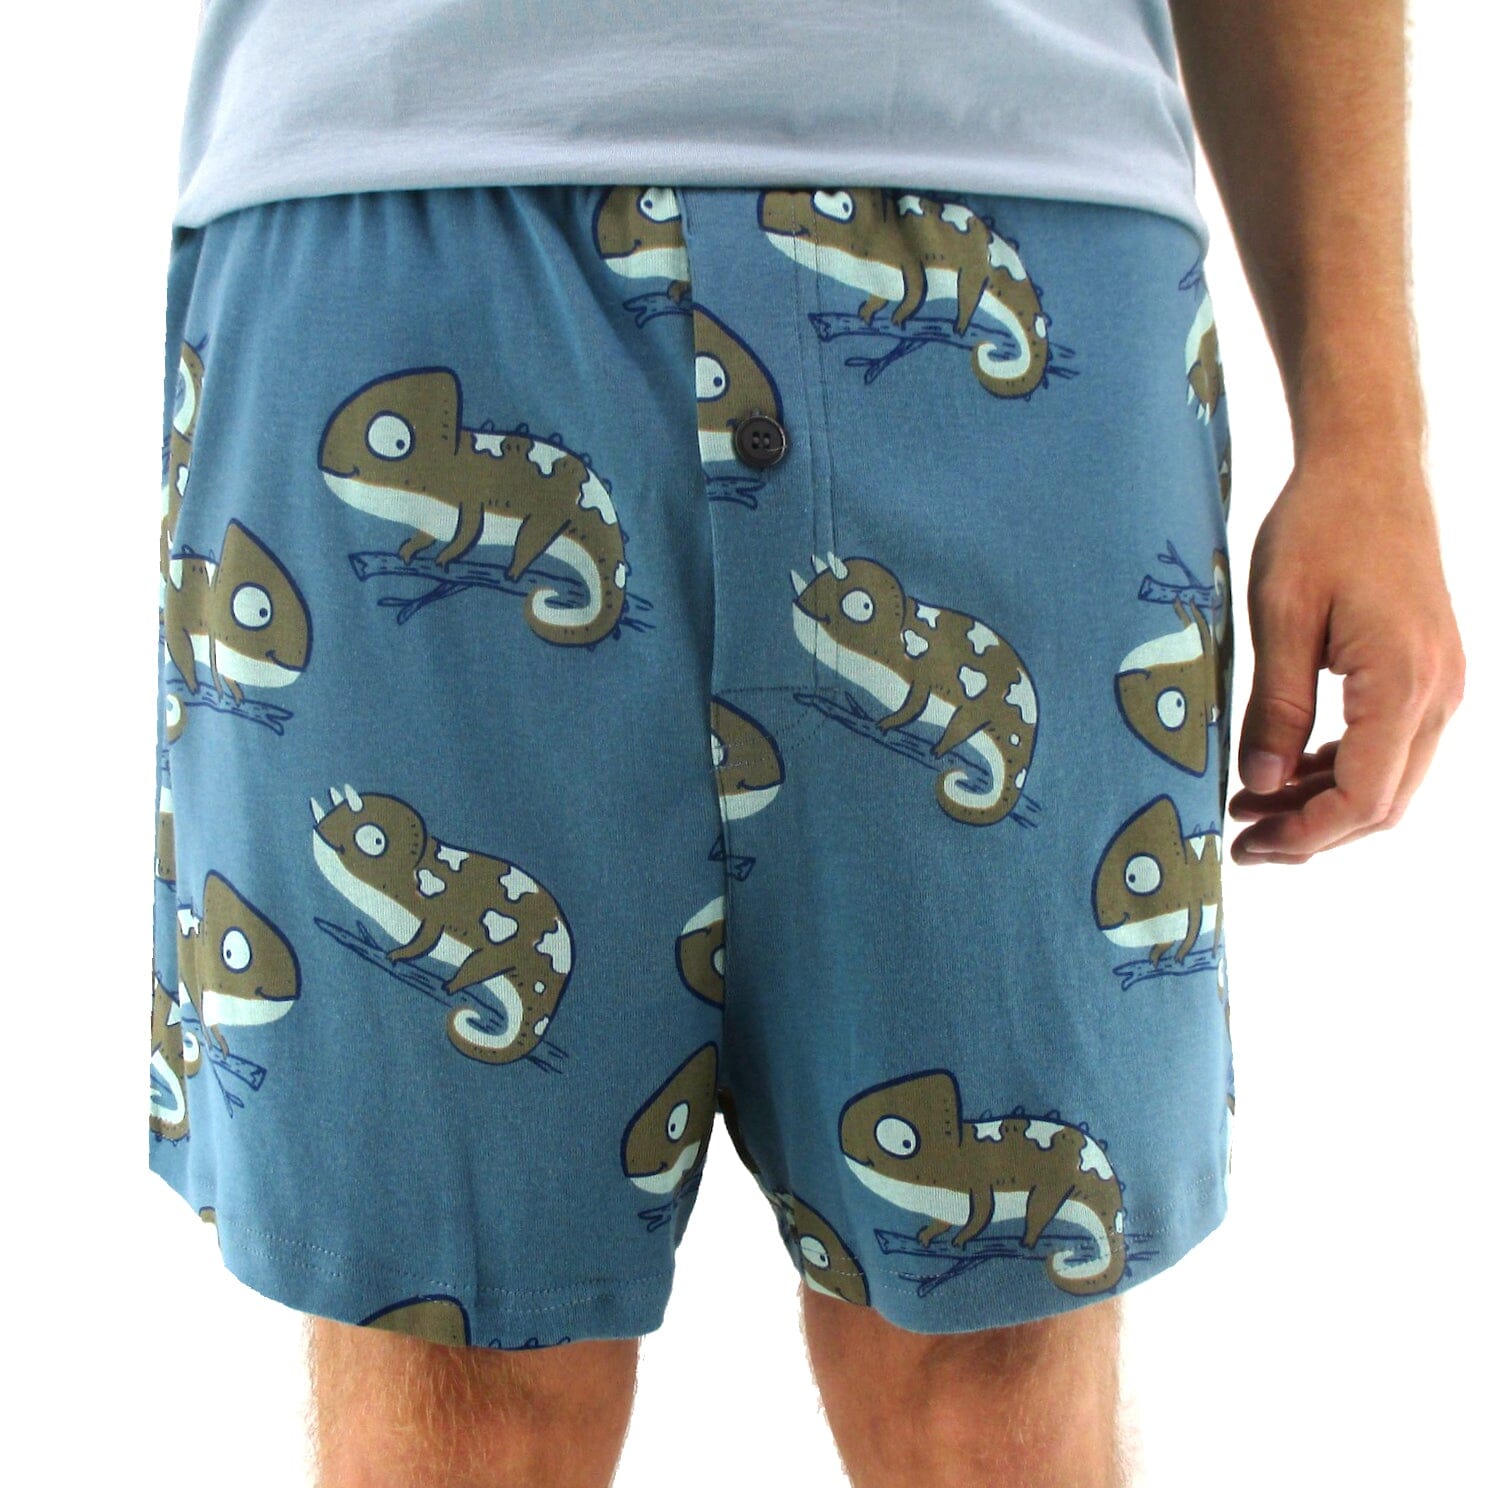 Men's Iguana Print Chameleon Patterned Cotton Knit Boxer Pajama Shorts